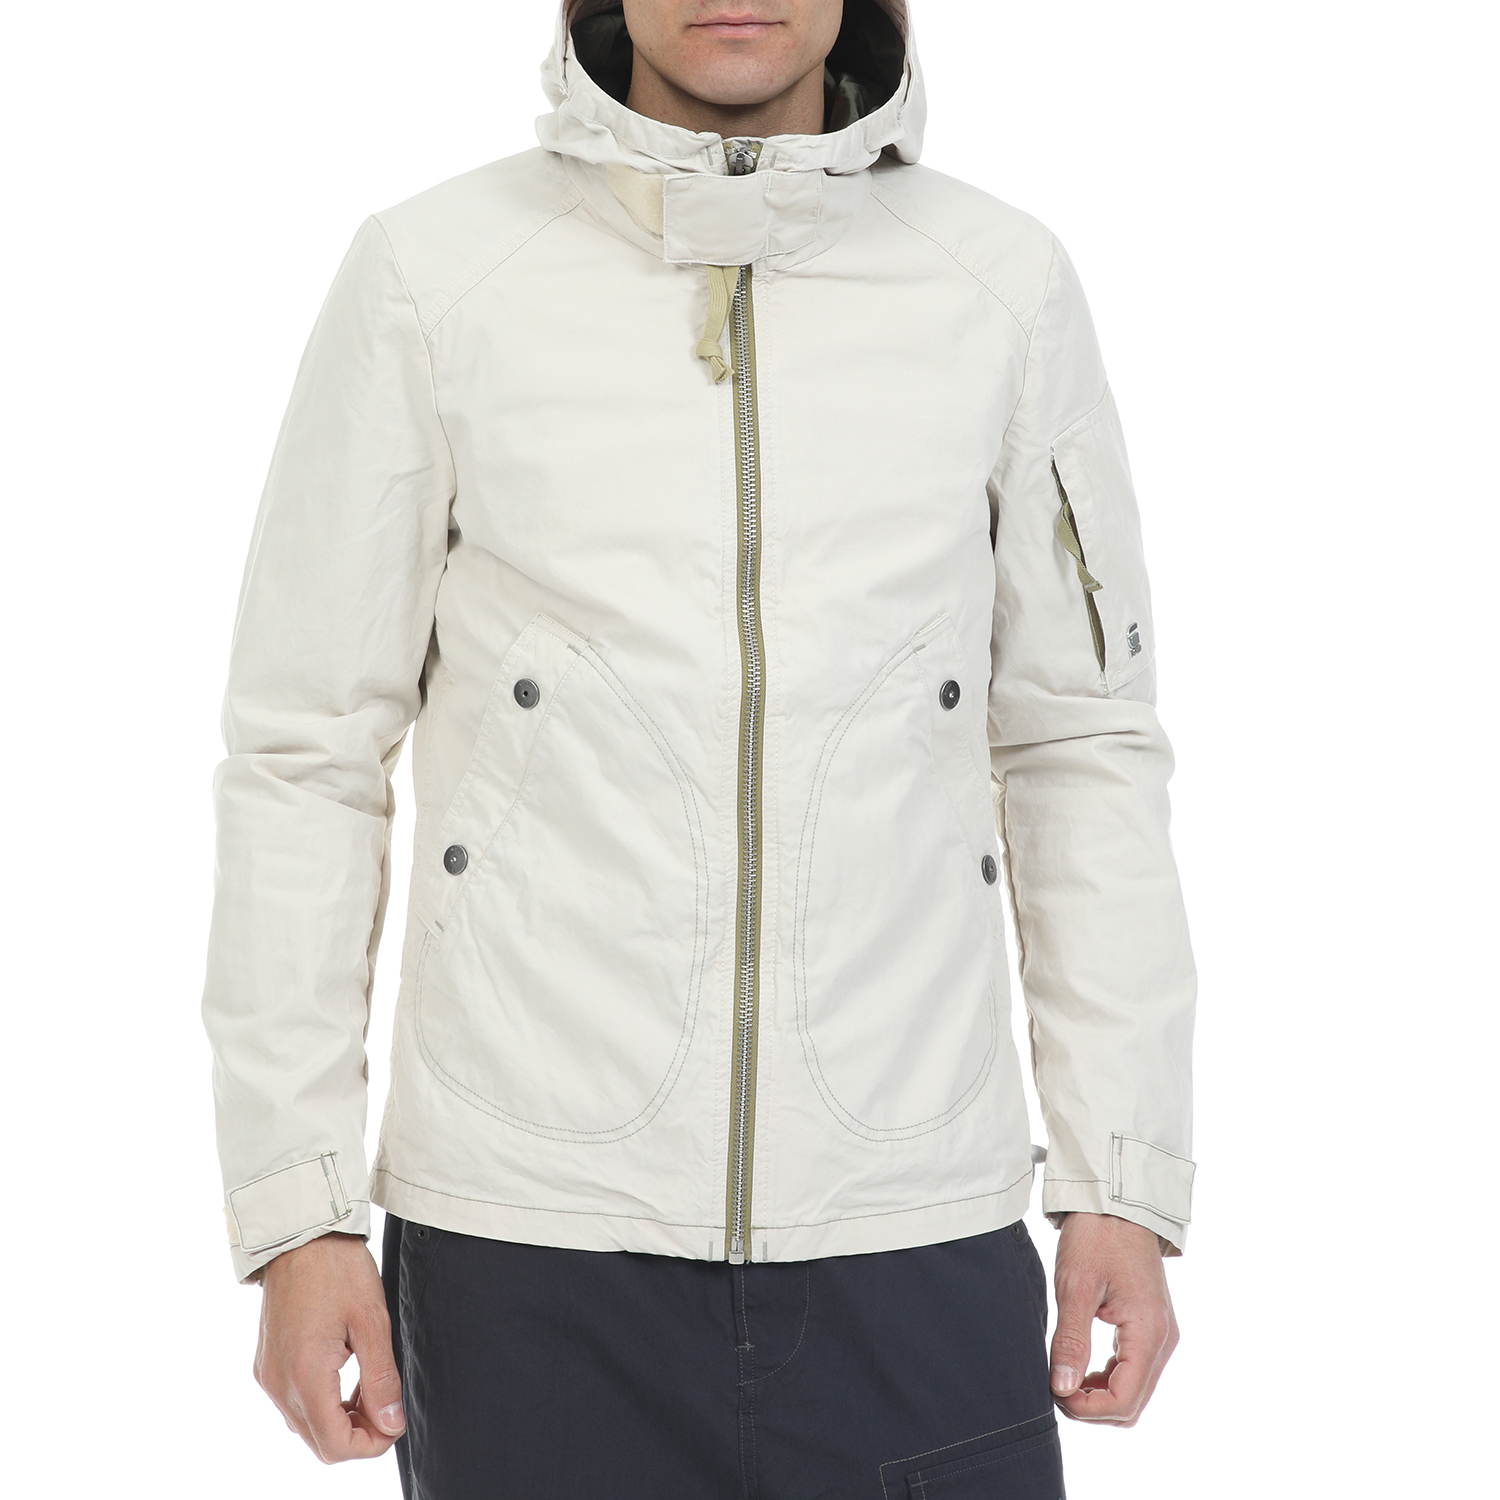 G-STAR RAW - Ανδρικό jacket G-STAR RAW BOLT OVERSHIRT λευκό Ανδρικά/Ρούχα/Πανωφόρια/Μπουφάν